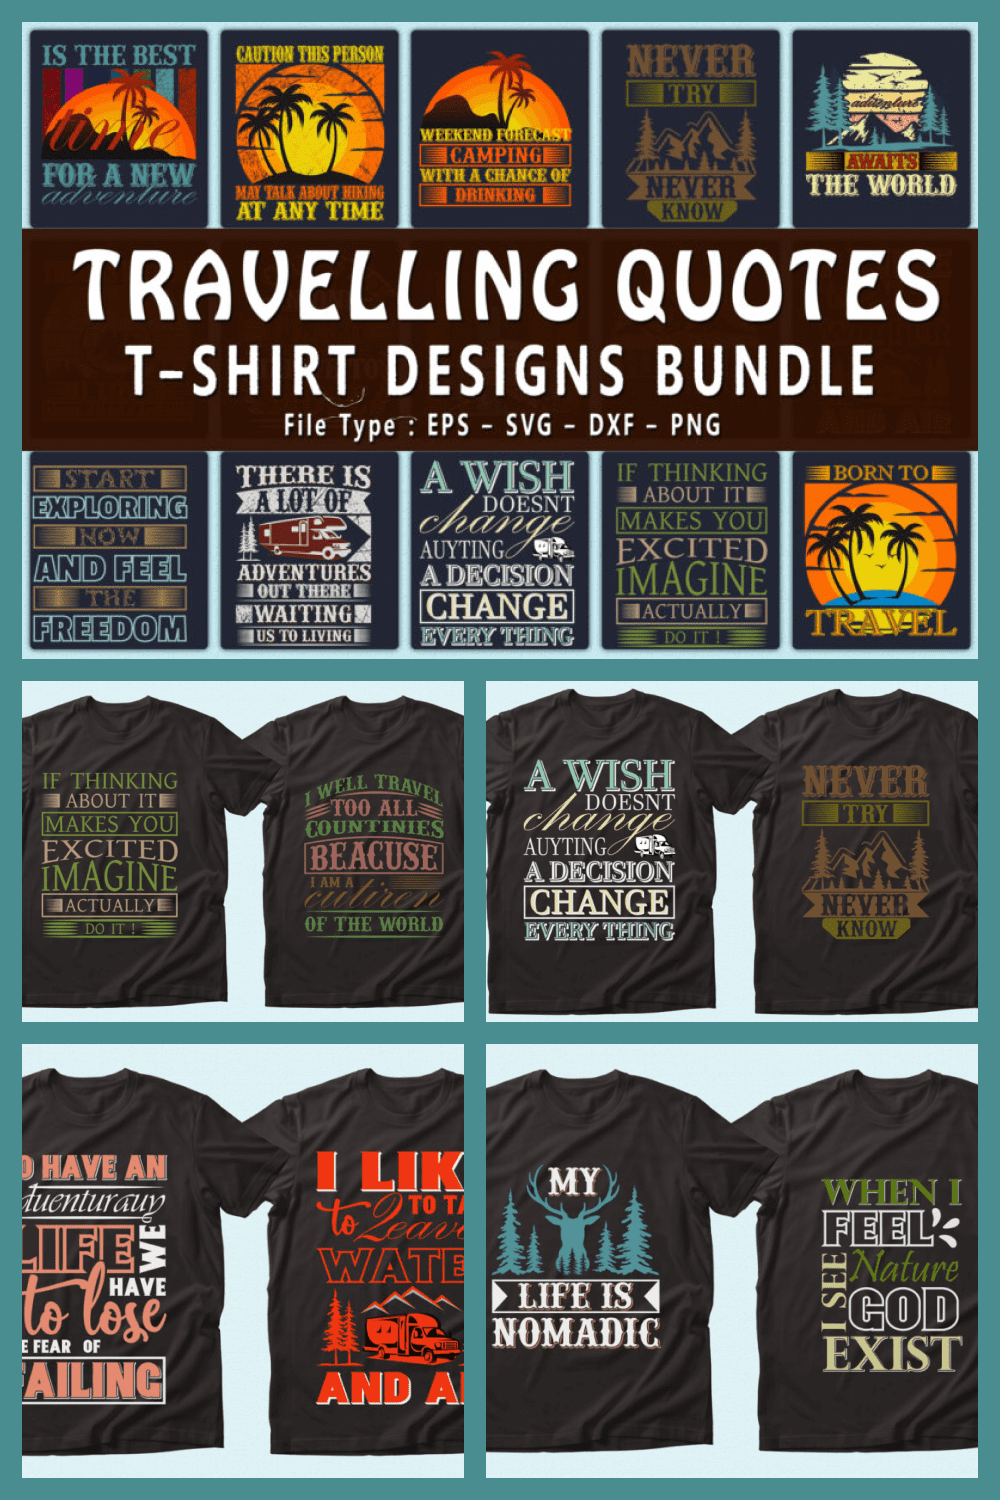 Trendy 20 Traveling T-shirt Designs - MasterBundles - Pinterest Collage Image.